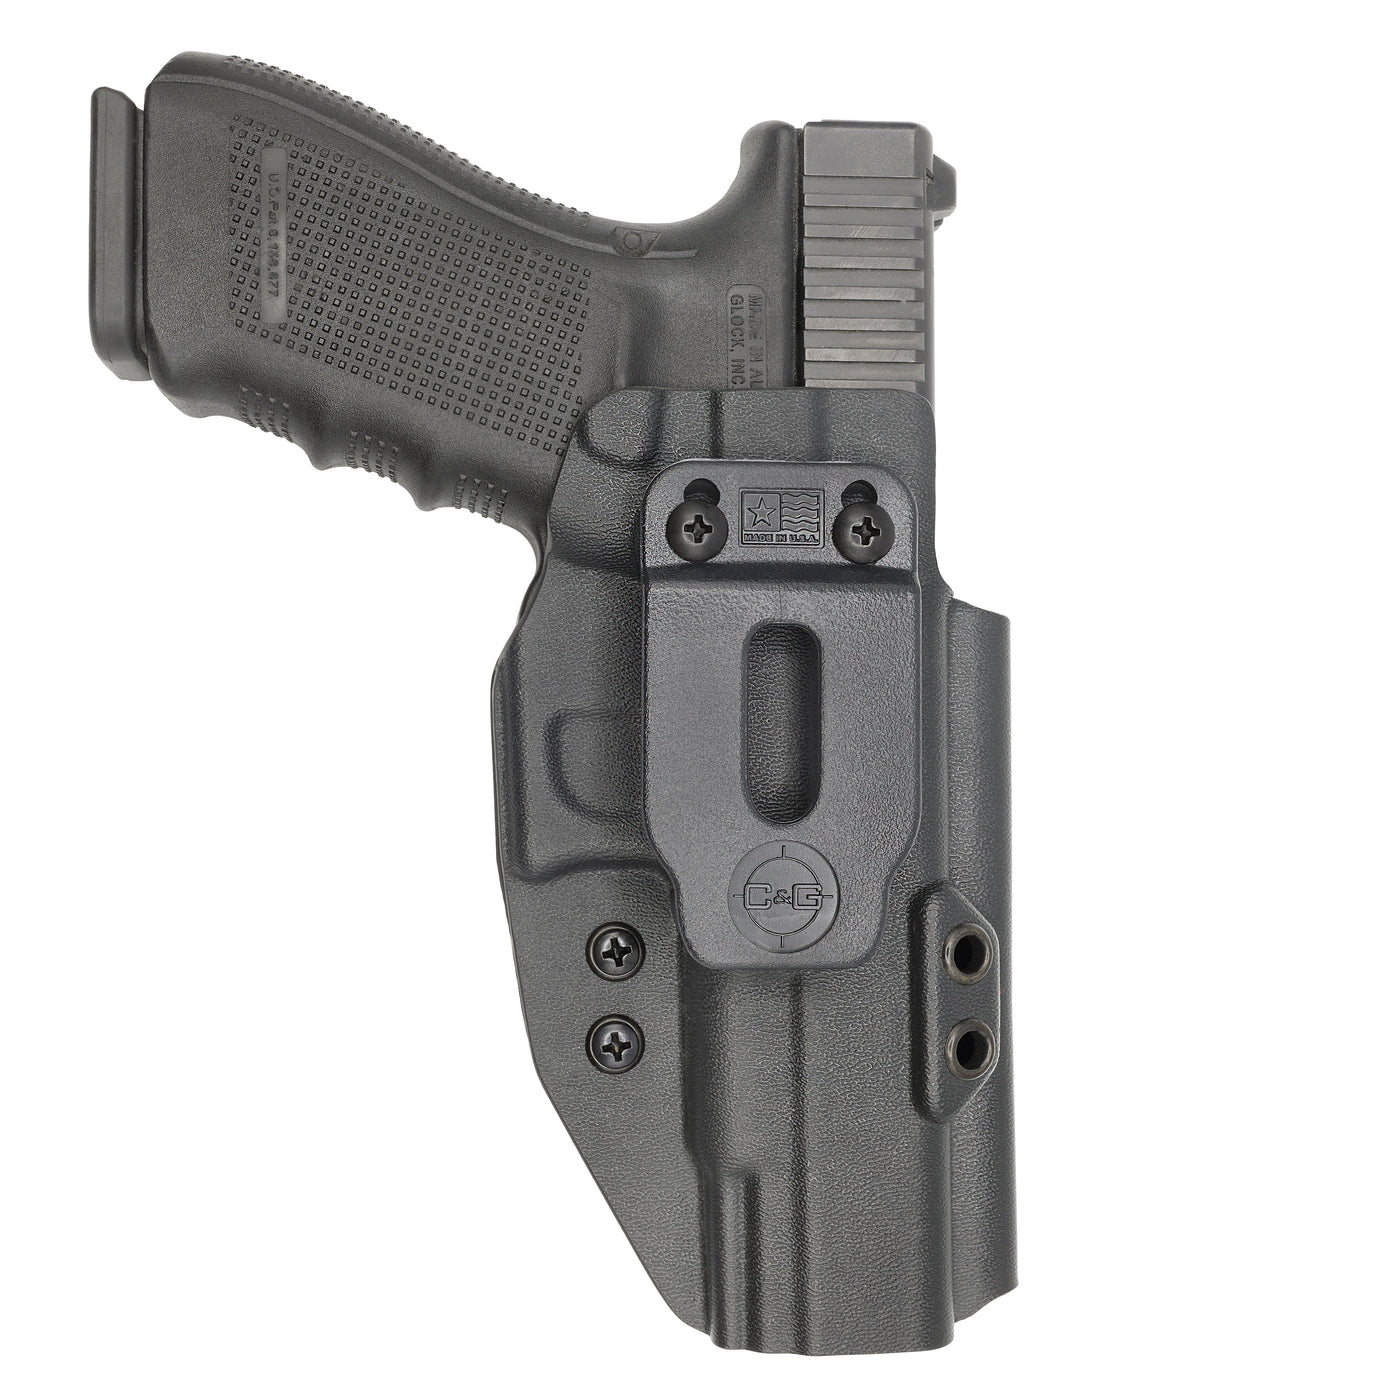 C&G Holsters Quickship IWB Covert Glock 20/21 in holstered position